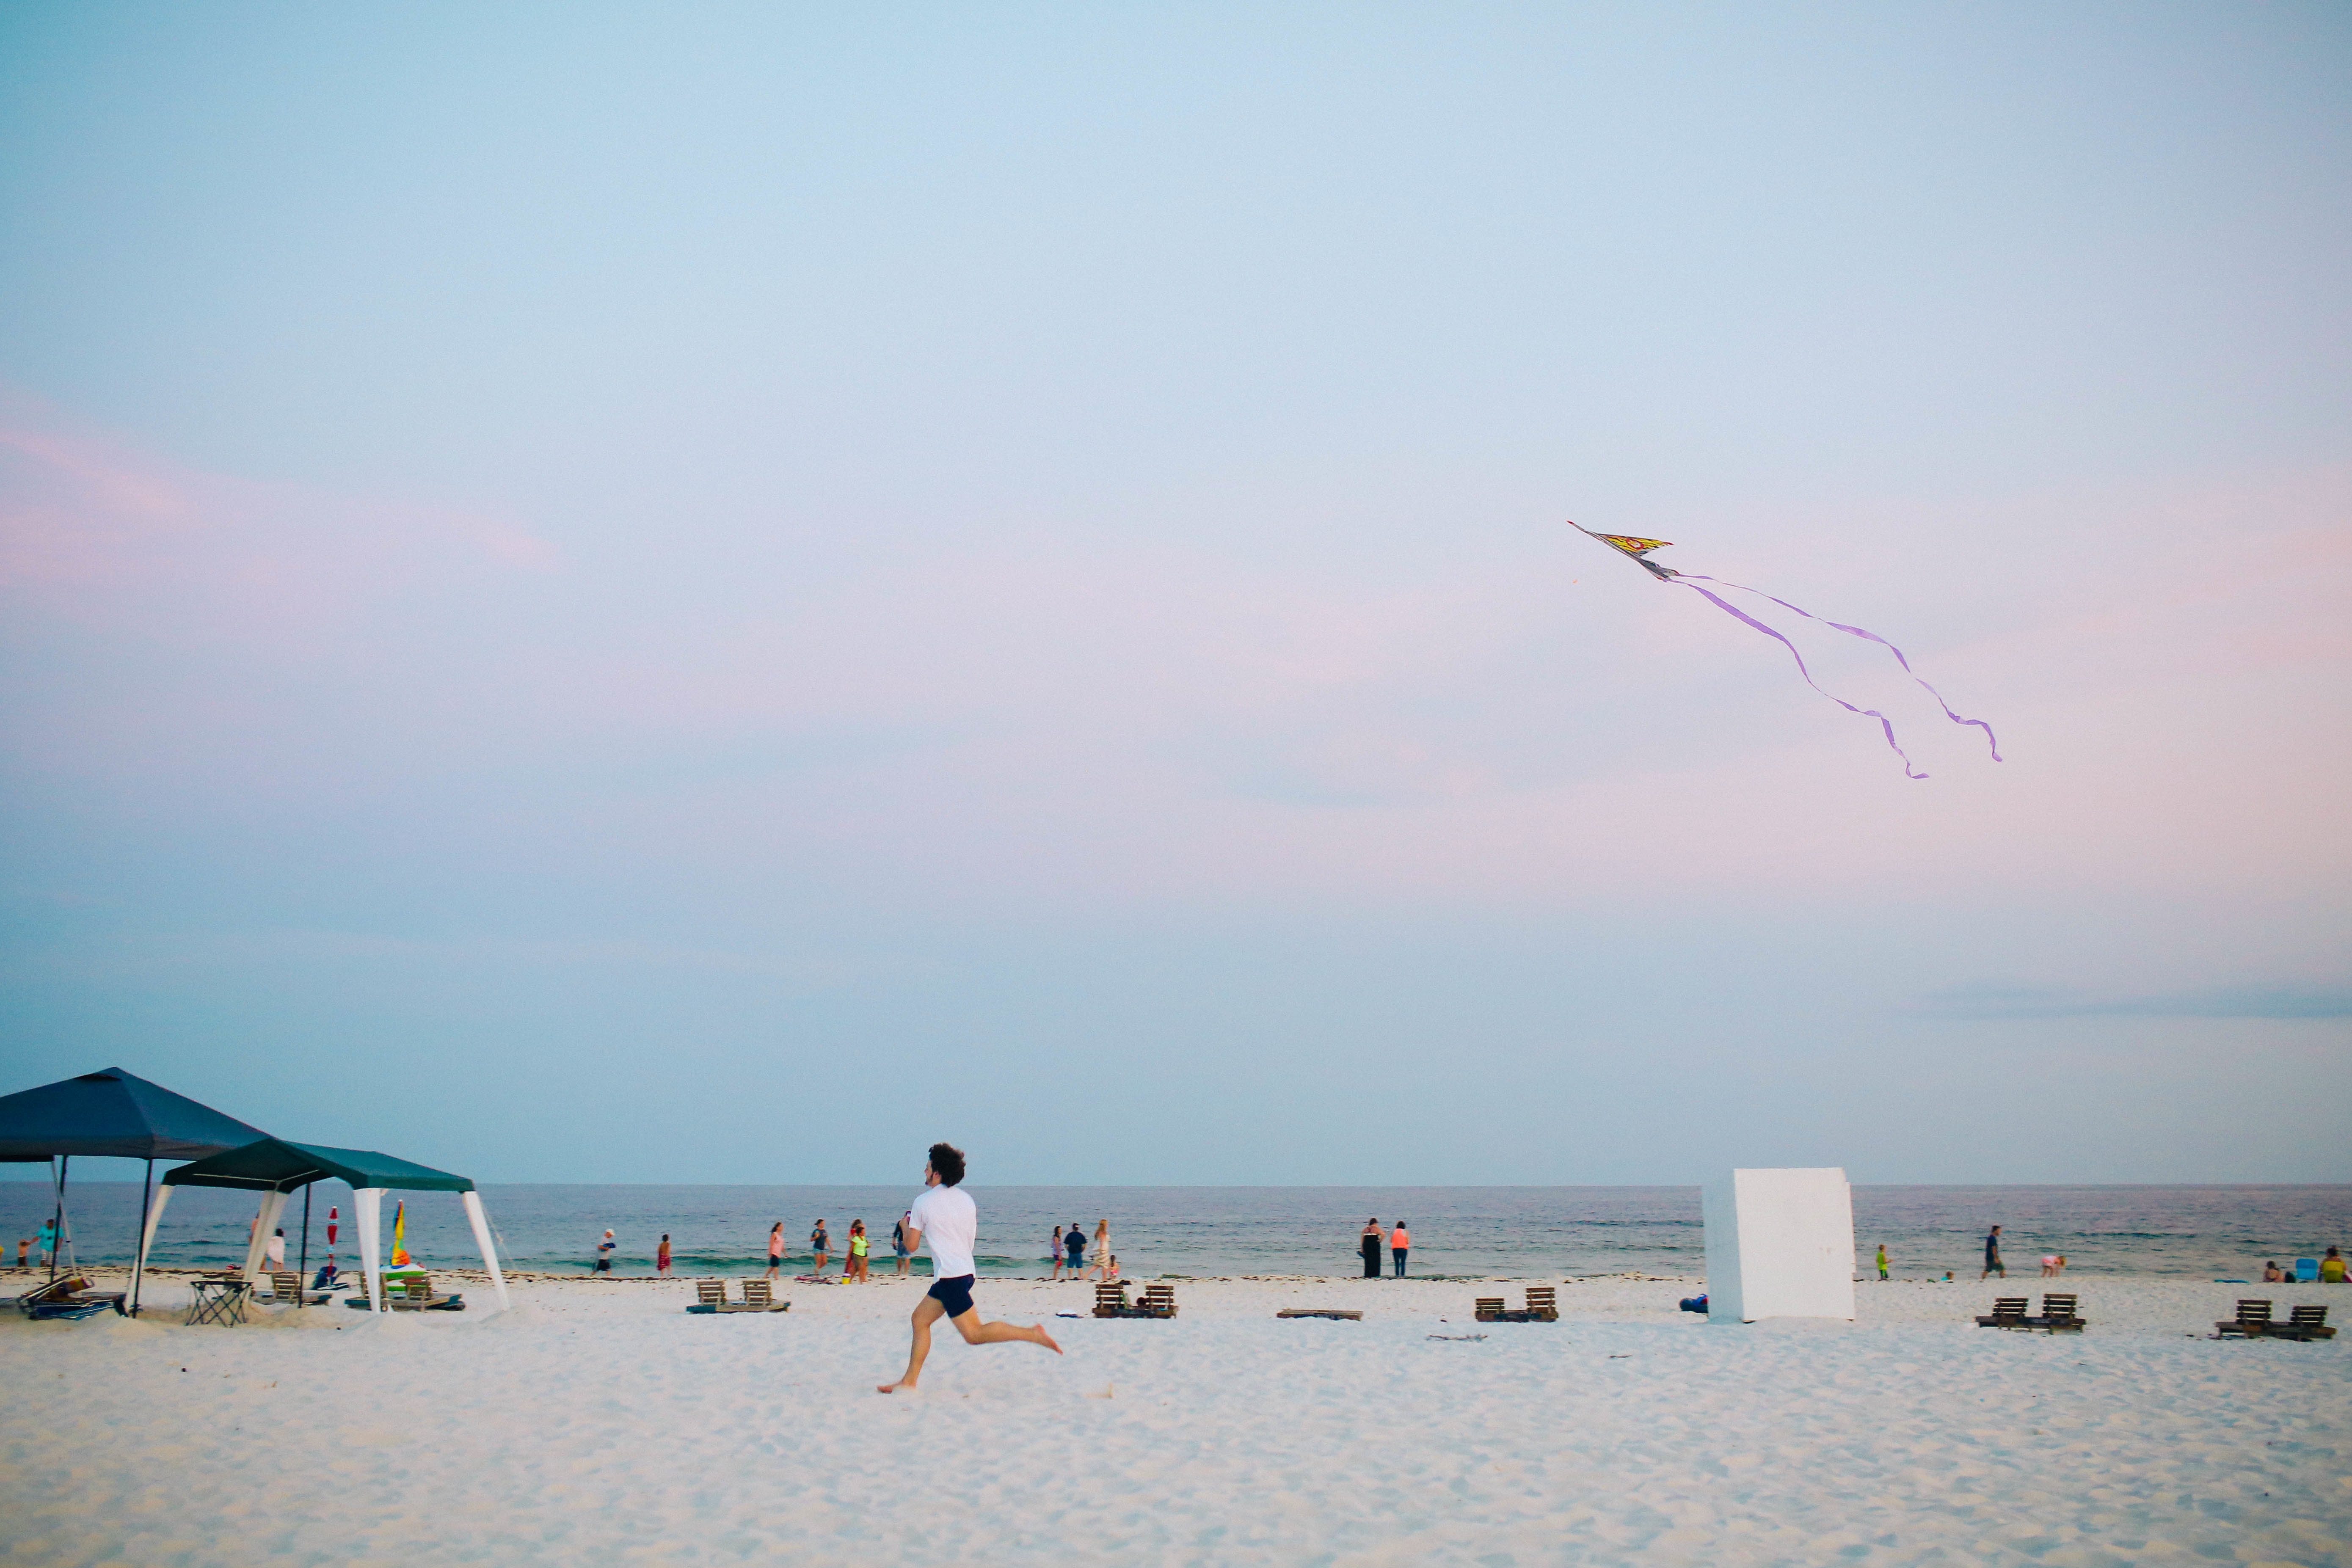 Kite, Activity, Beach, Fly, Flying, HQ Photo